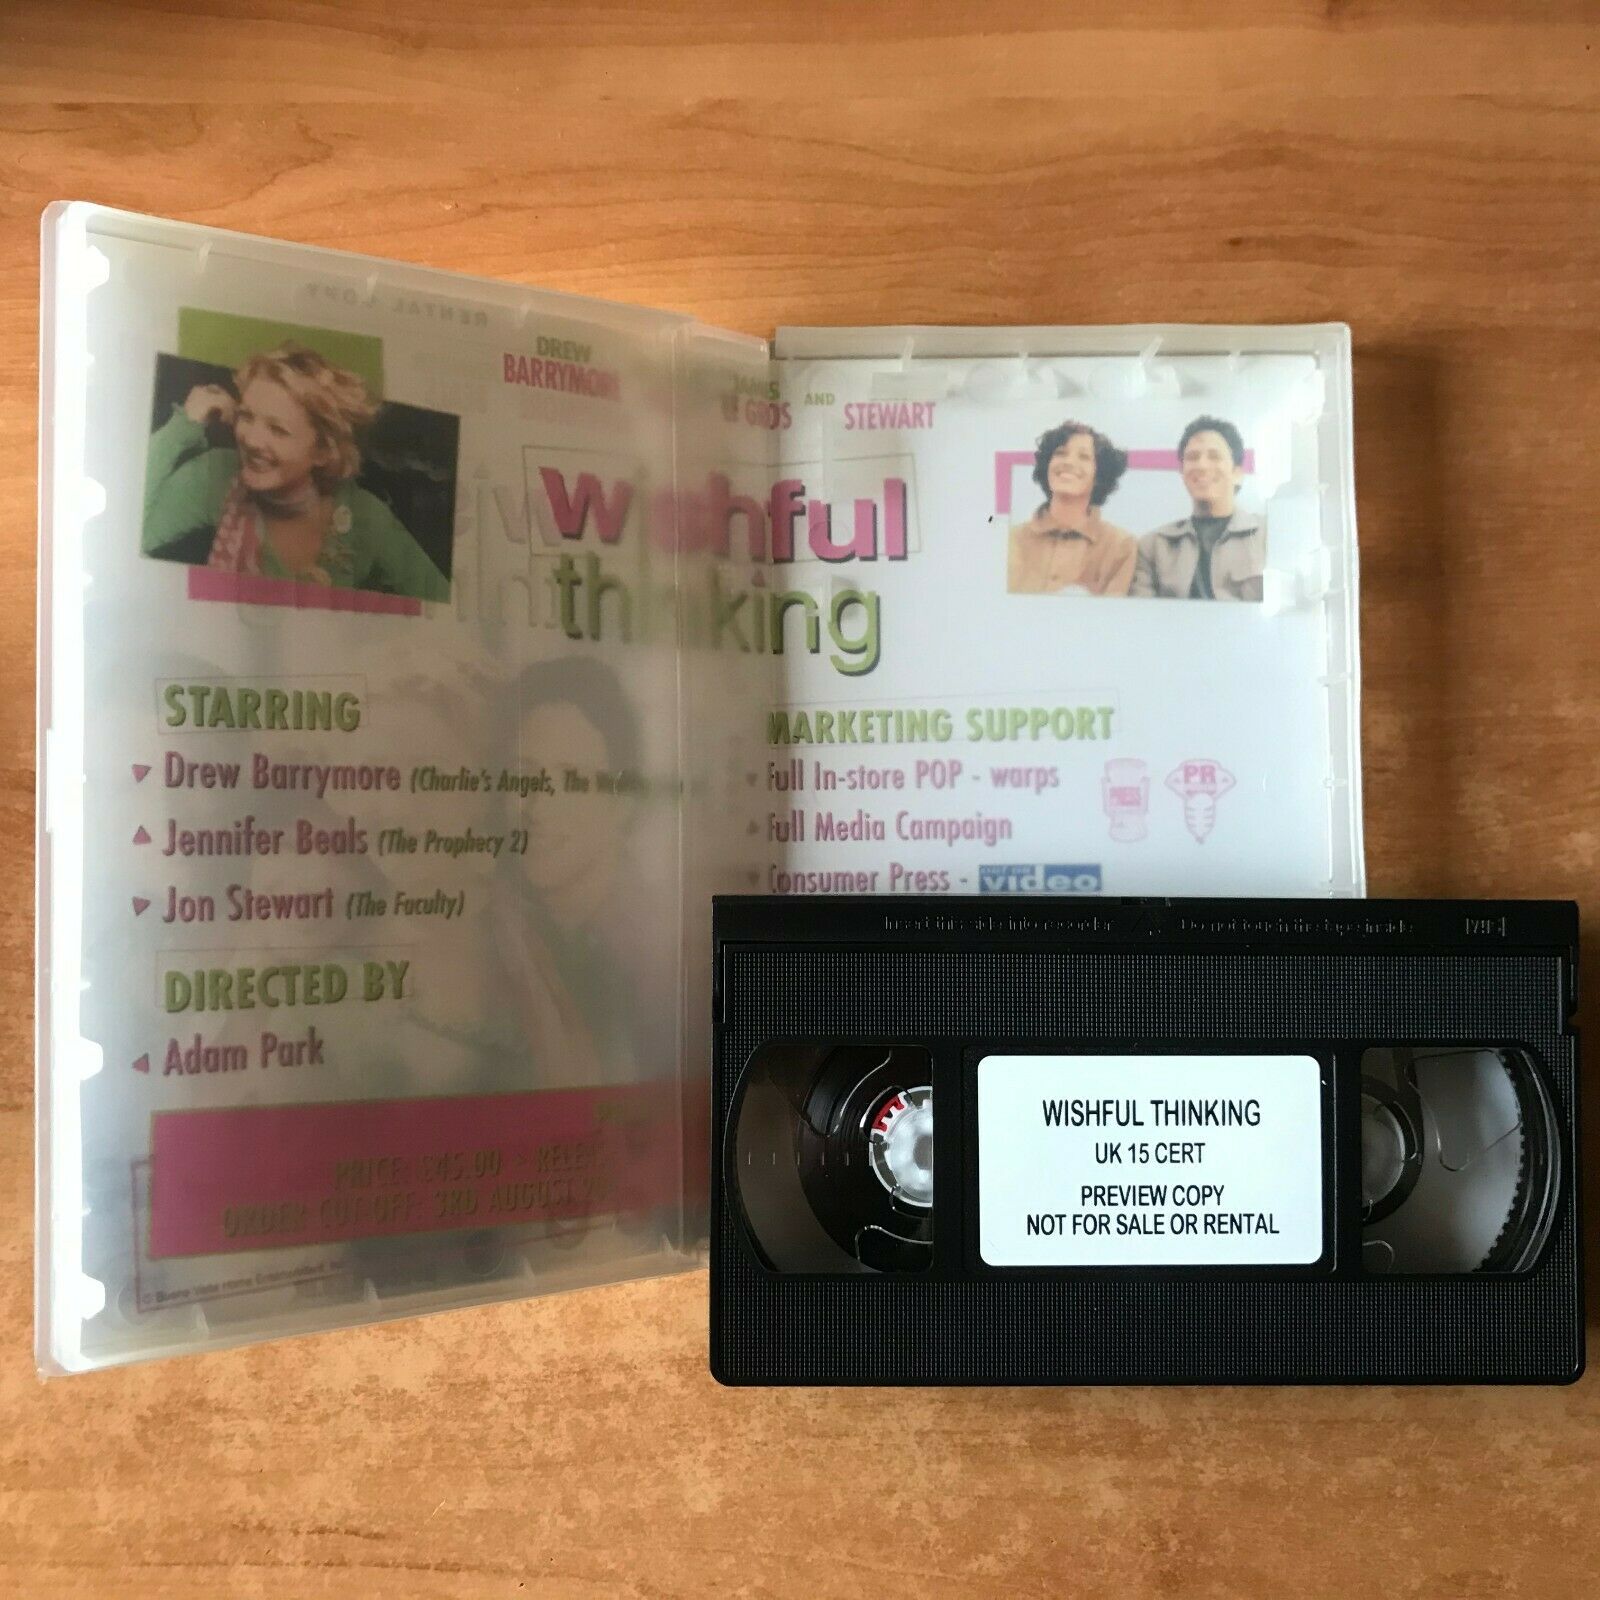 Wishful Thinking: Romantic Comedy; Sample Tape [Big Box] Drew Barrymore - VHS-